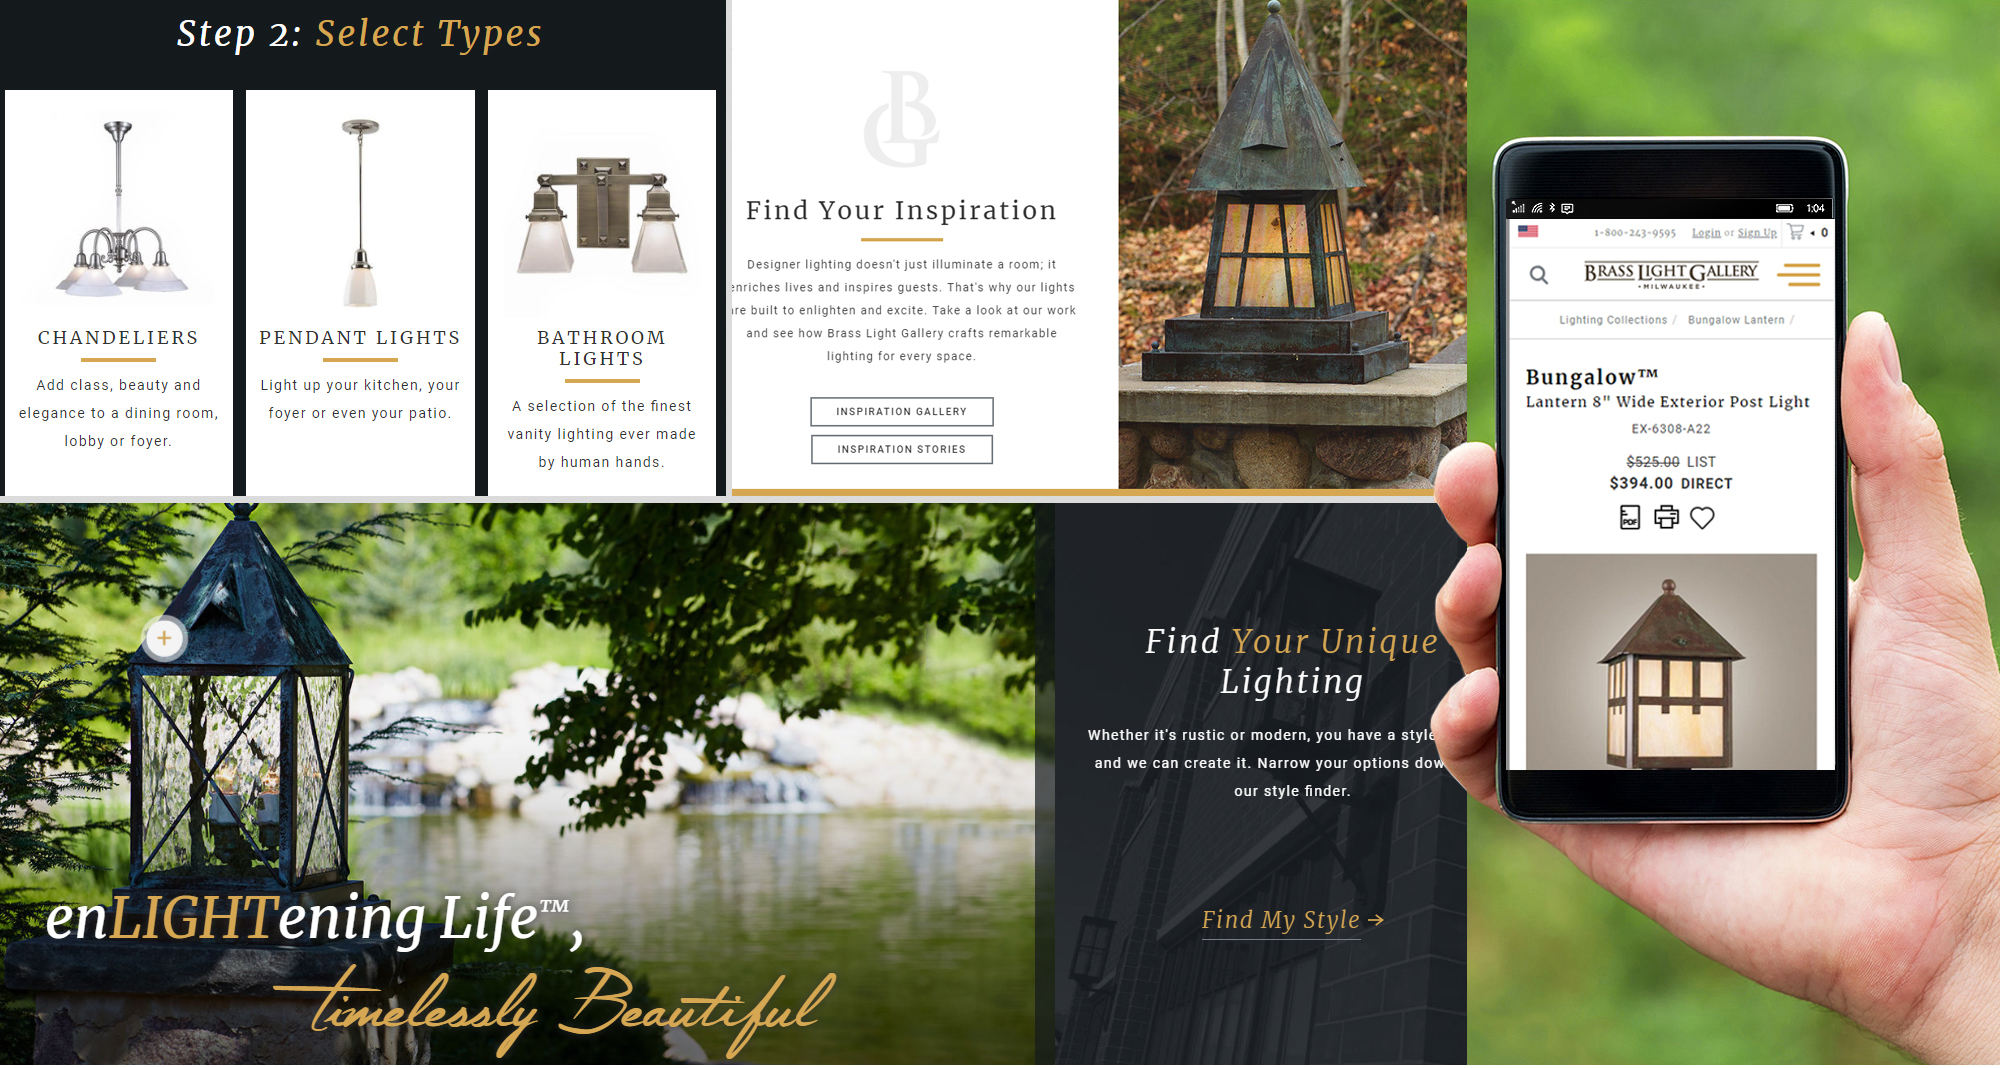 Milwaukee web marketing for Brass Light Gallery 